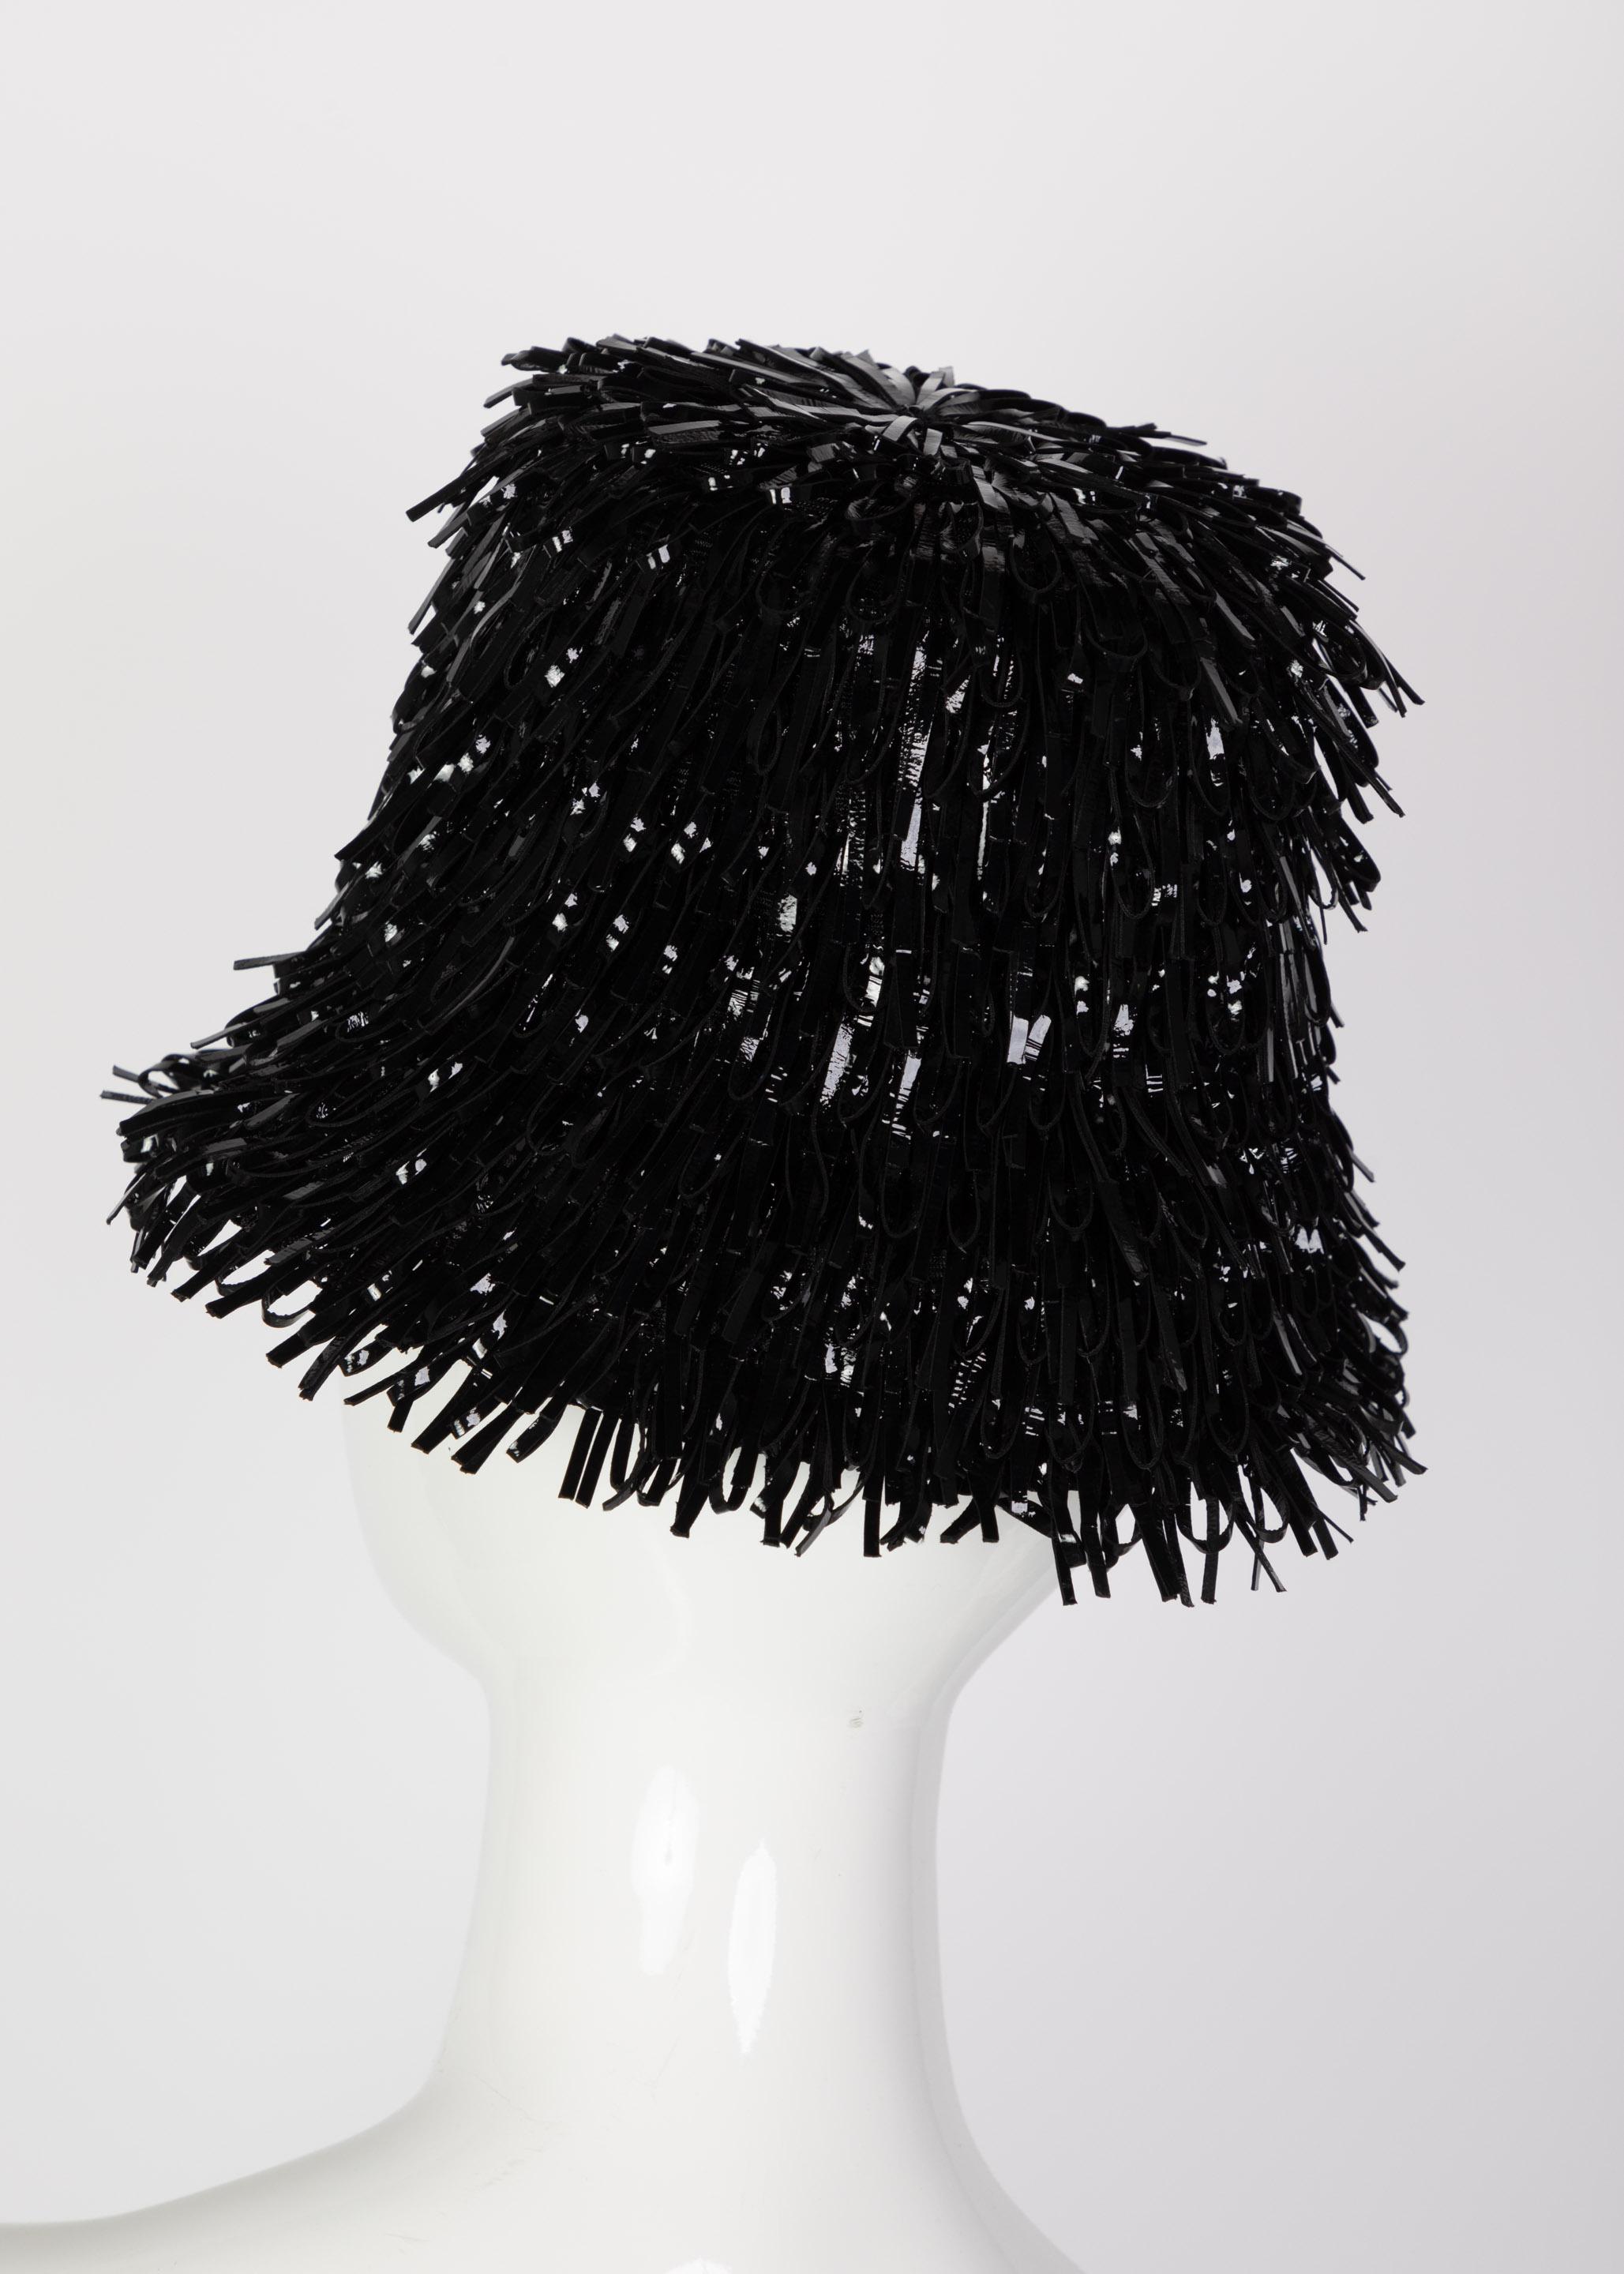 Women's Balenciaga Black Faux Patent Leather Hat Resort 2014 For Sale